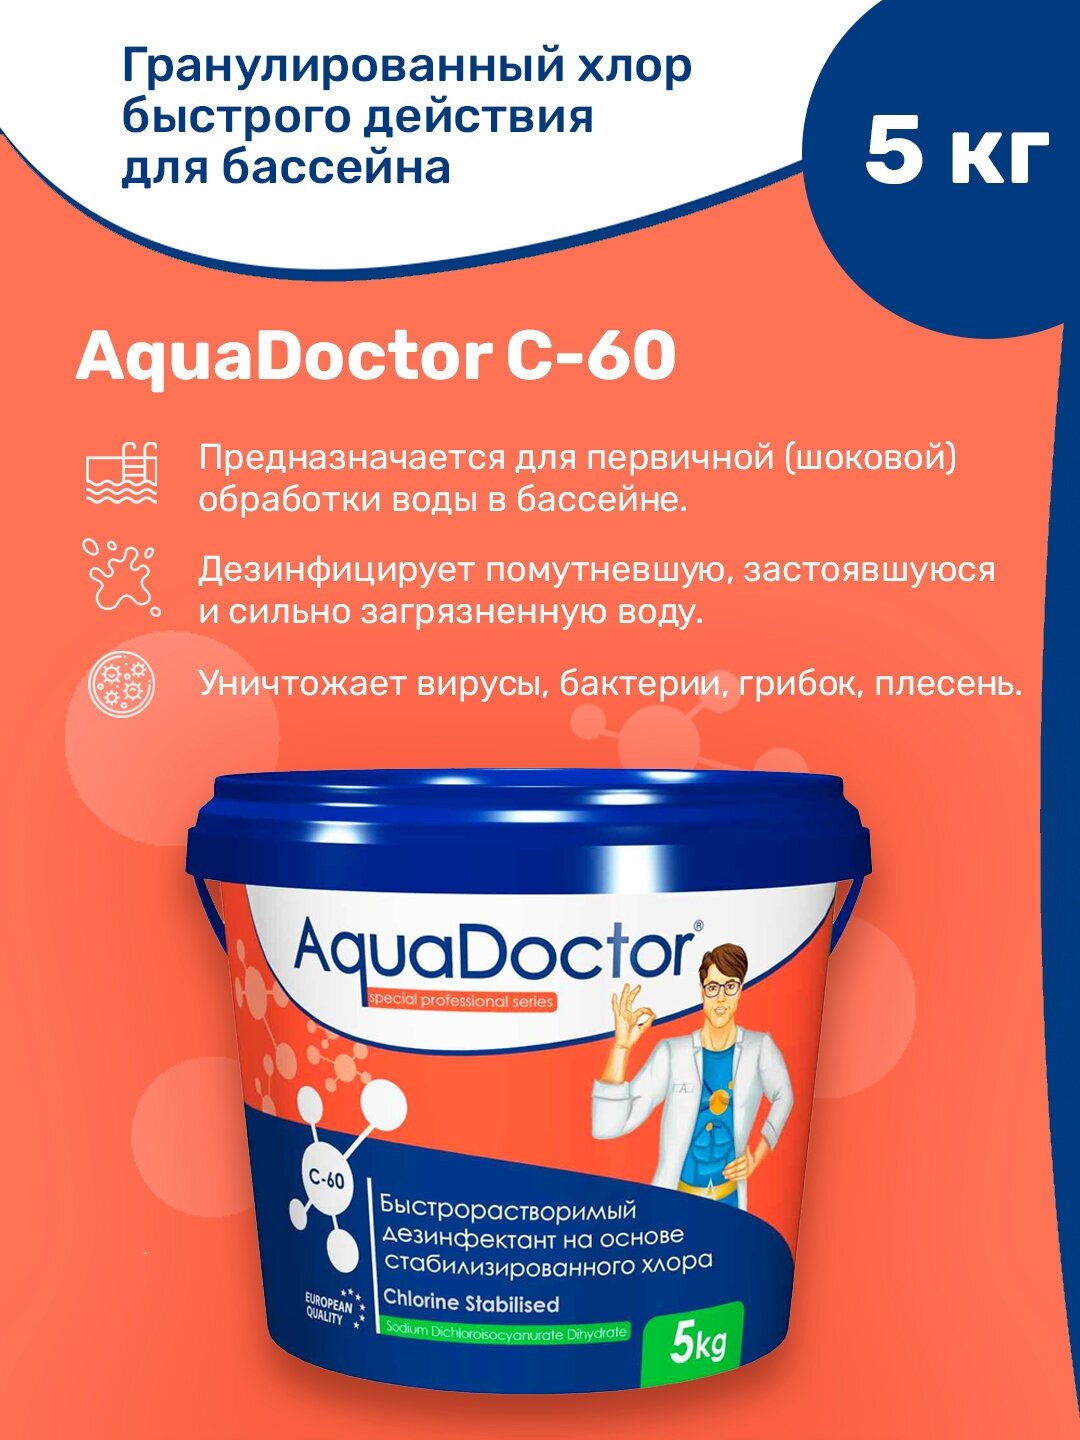 Химия для бассейна AquaDoctor Хлор 5кг ведро (гранулы) AQ1550